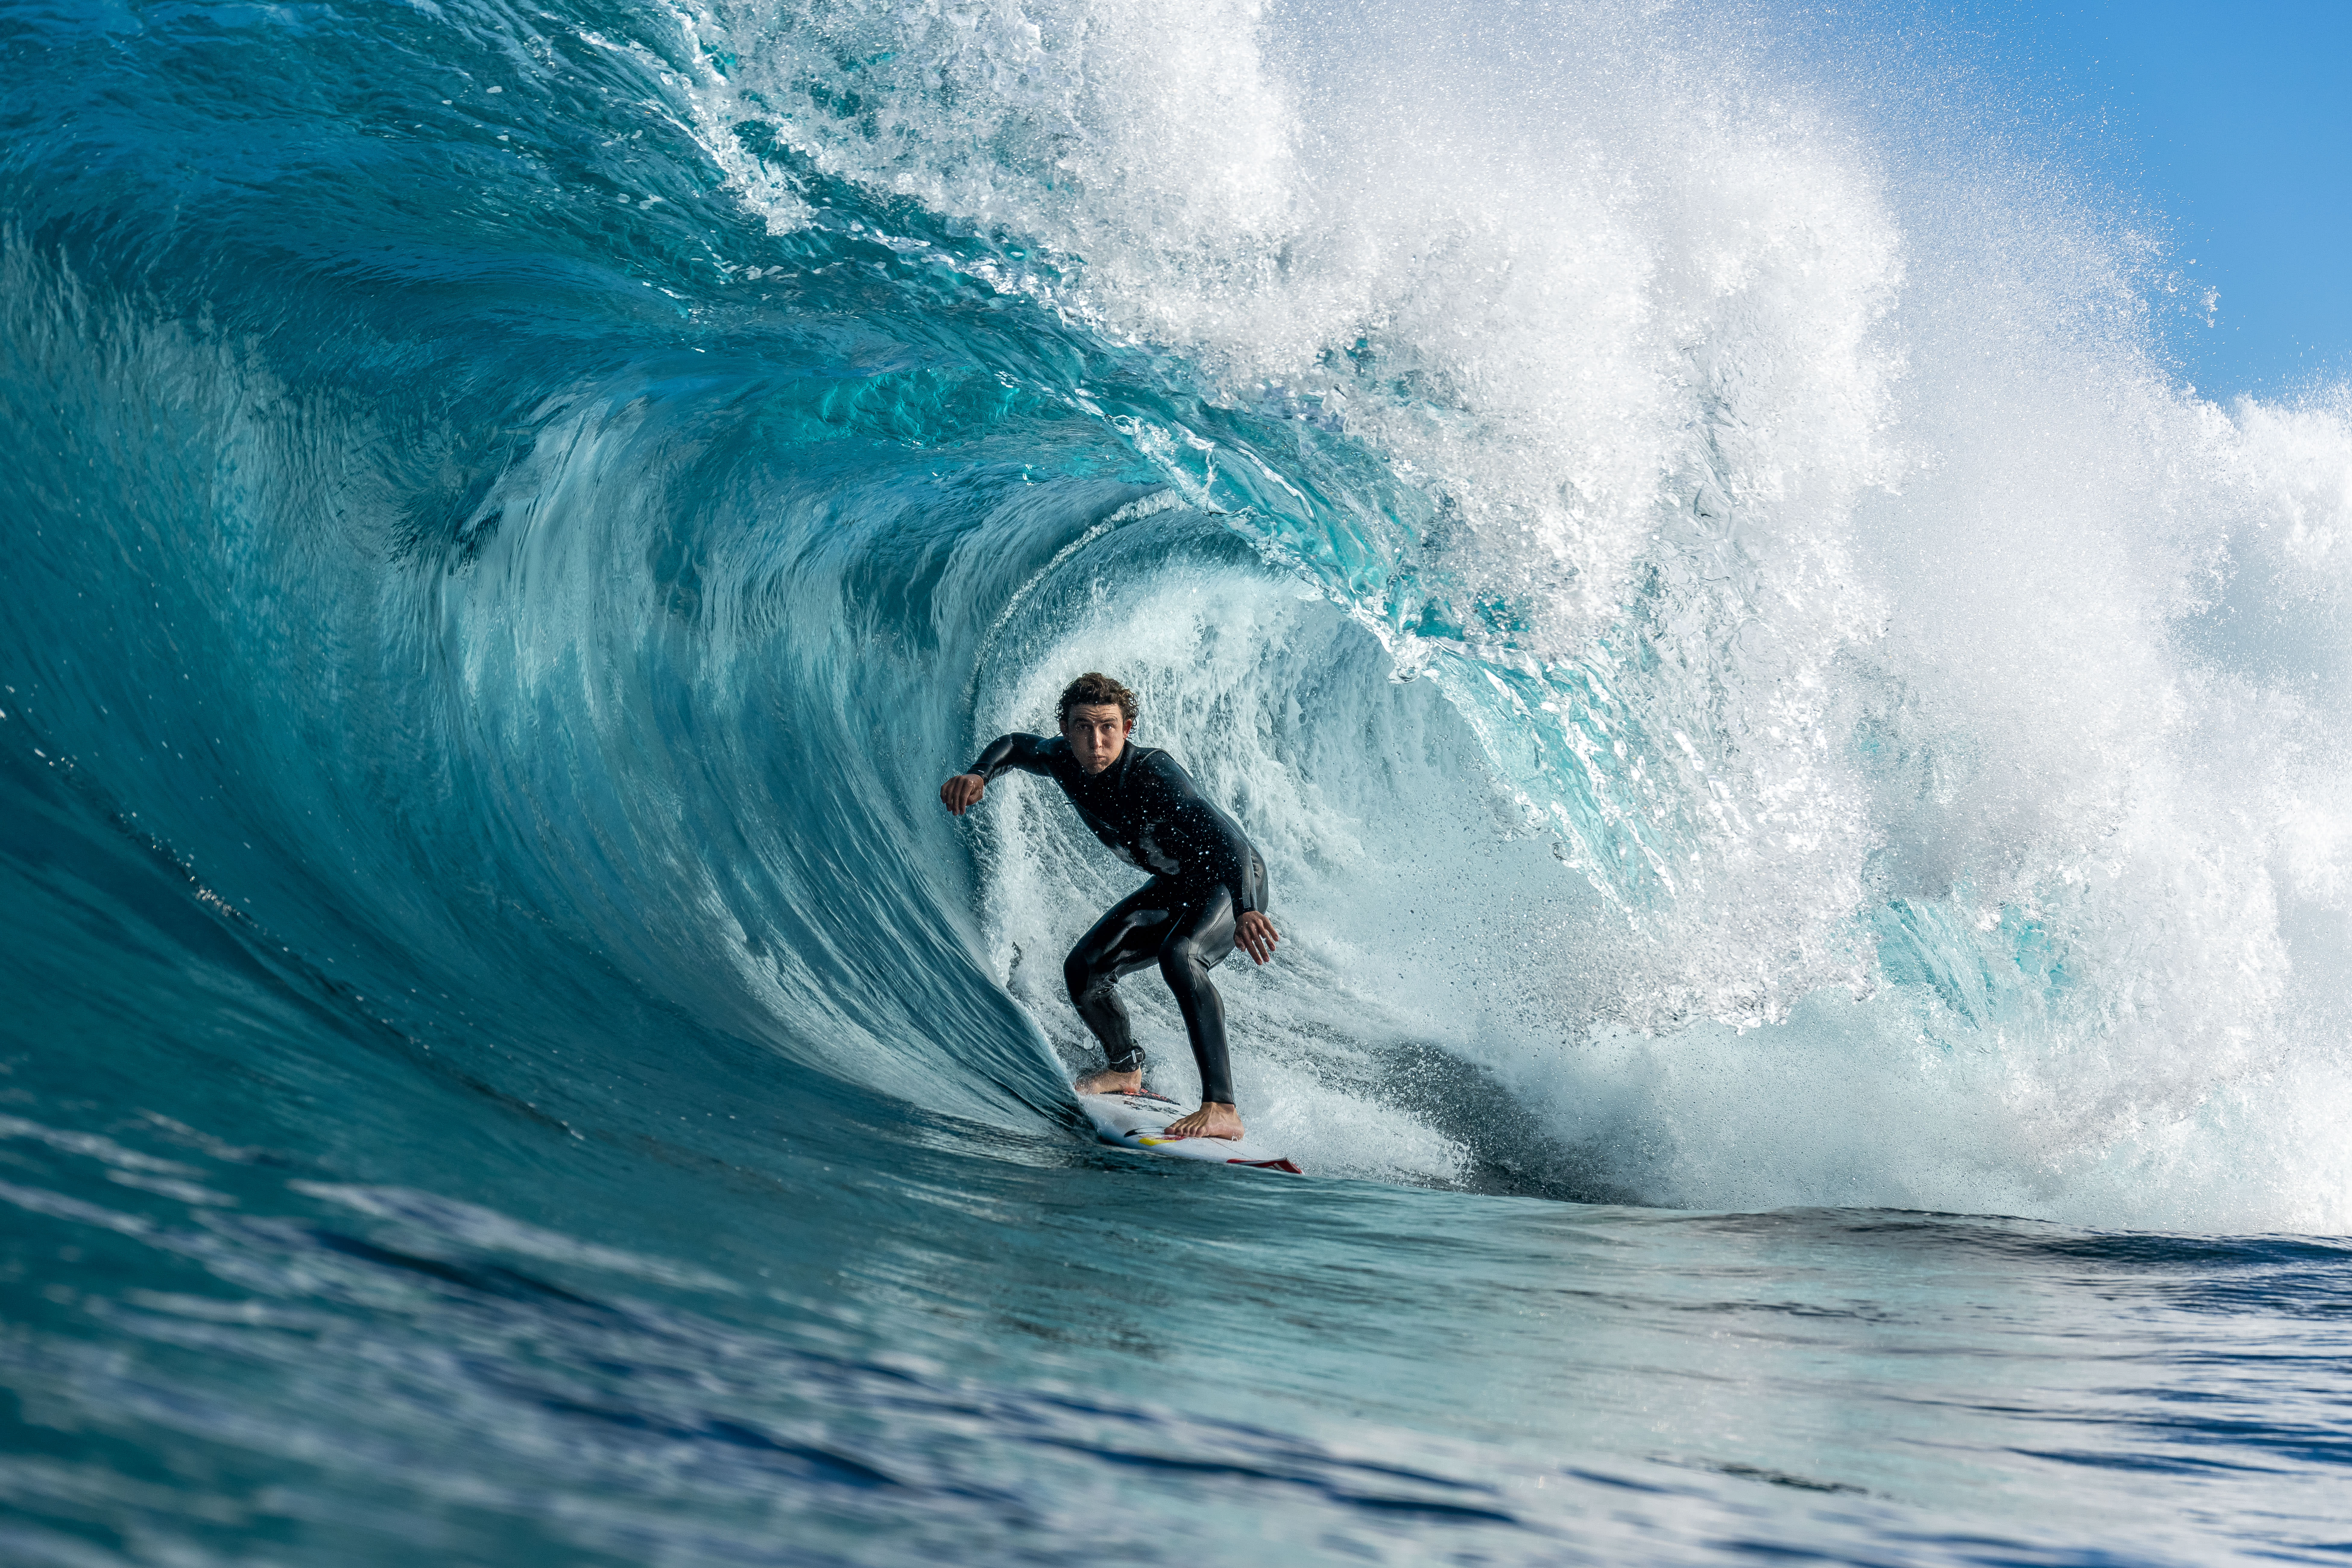 TOP 10 BEST Surfboard Shaper near Dana Point, CA - Updated